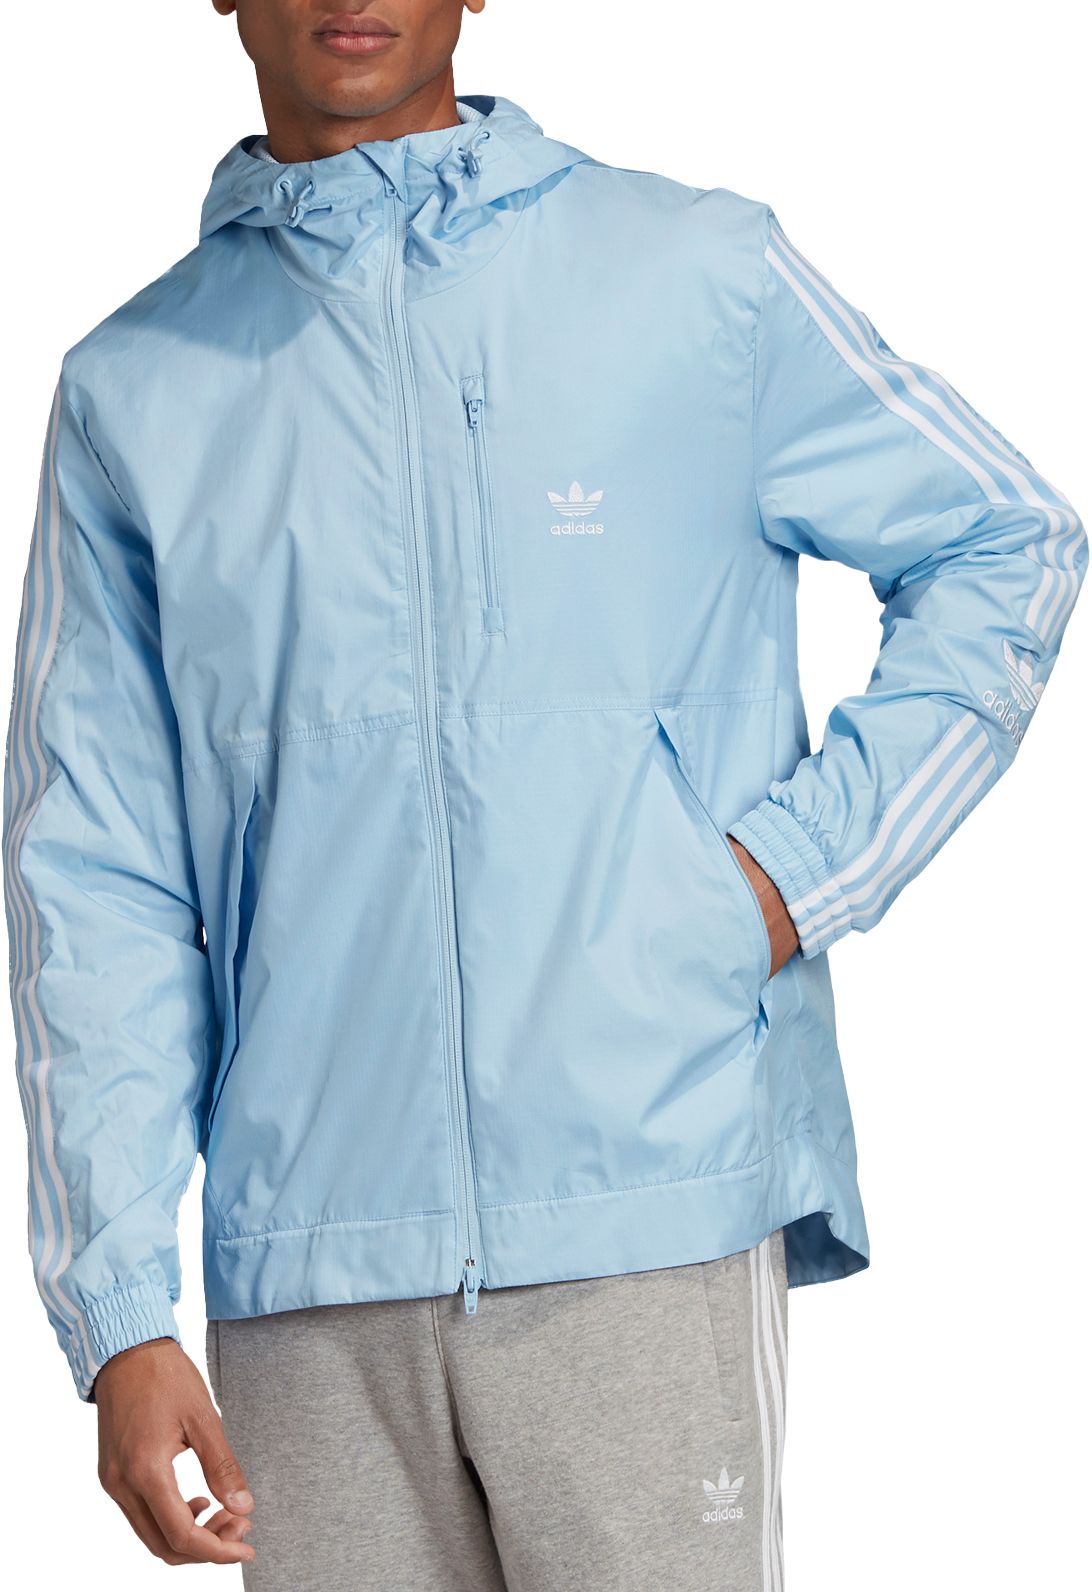 light blue adidas jacket with white stripes